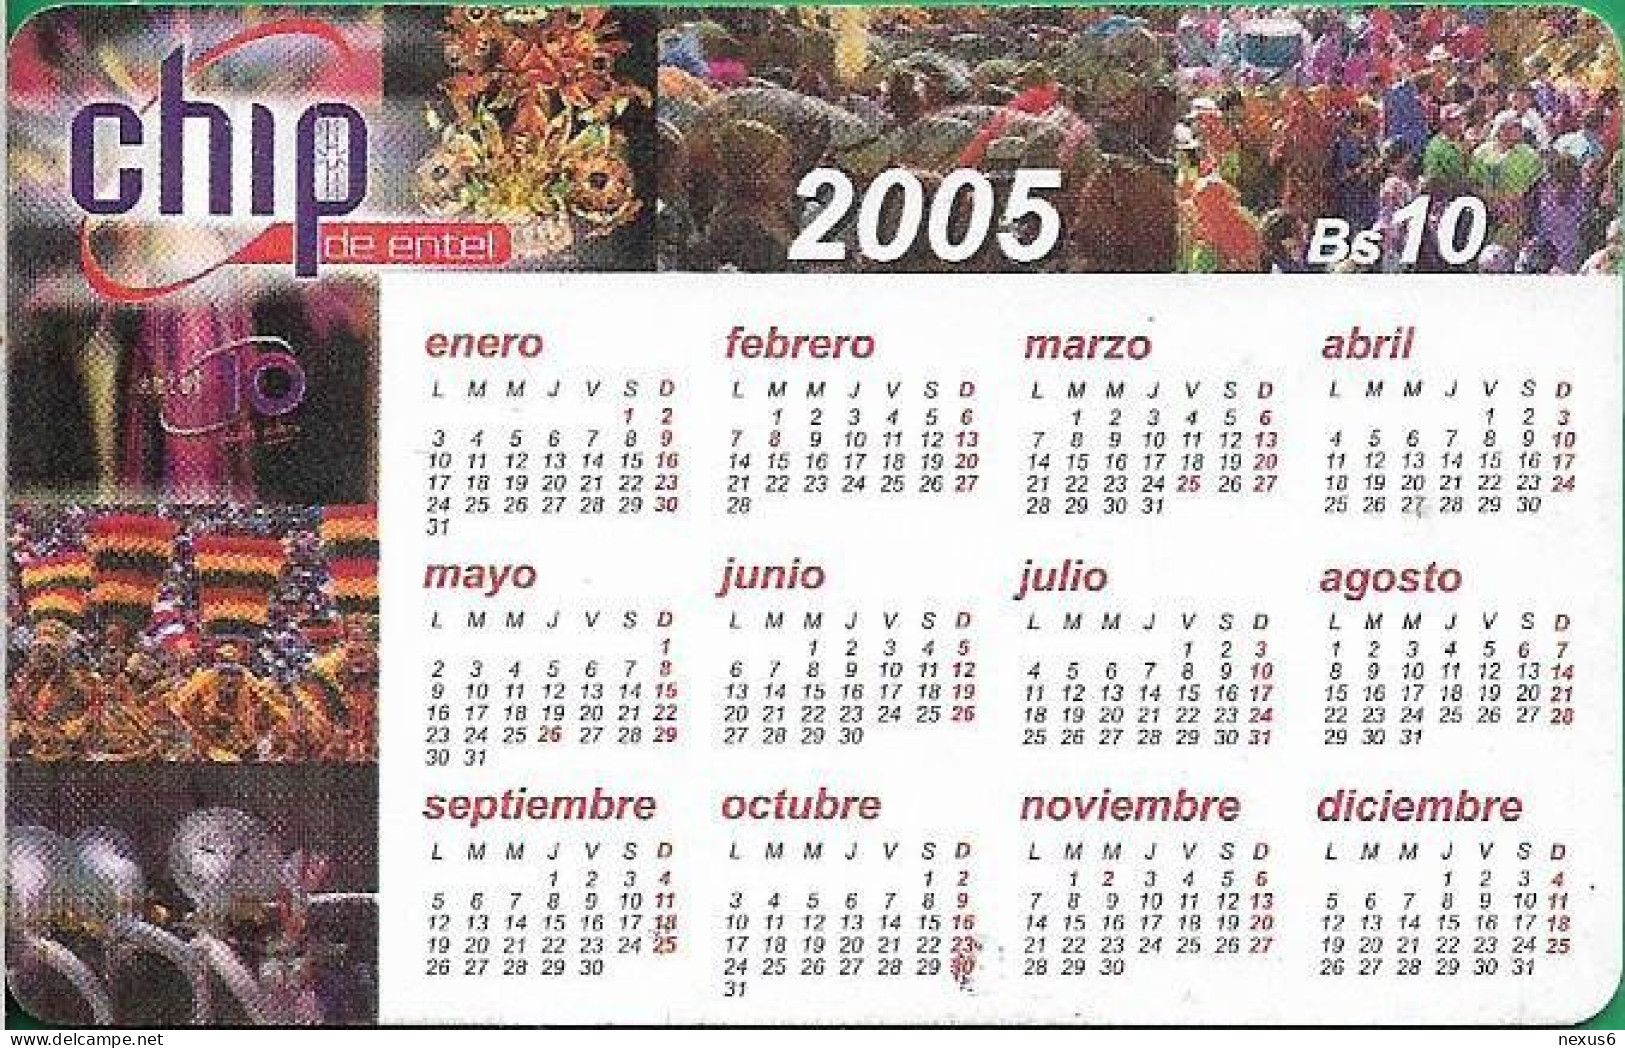 Bolivia - Entel (Chip) - Calendar 2005, Gem5 Black, 2004, 10Bs, Used - Bolivien